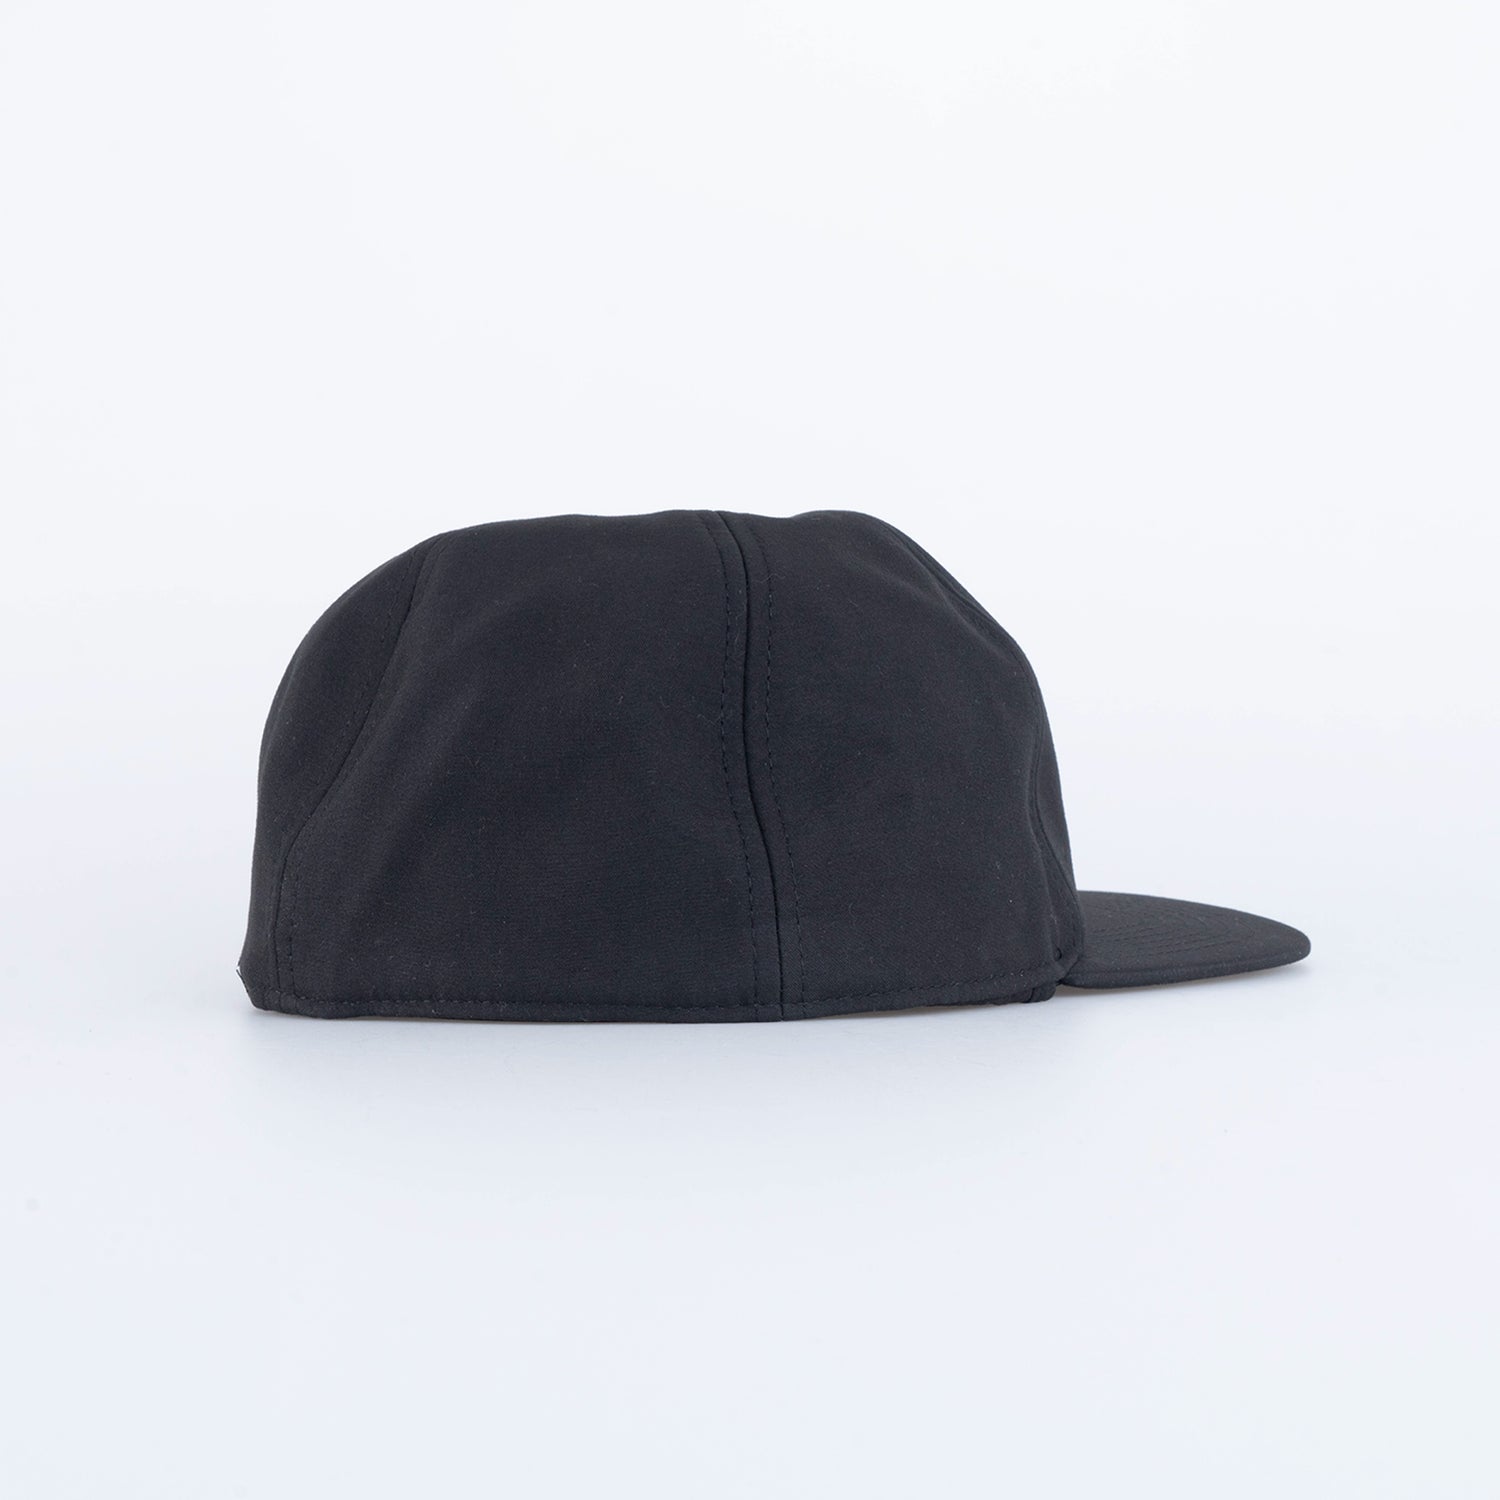 SUNDSVALL CAP - BLACK